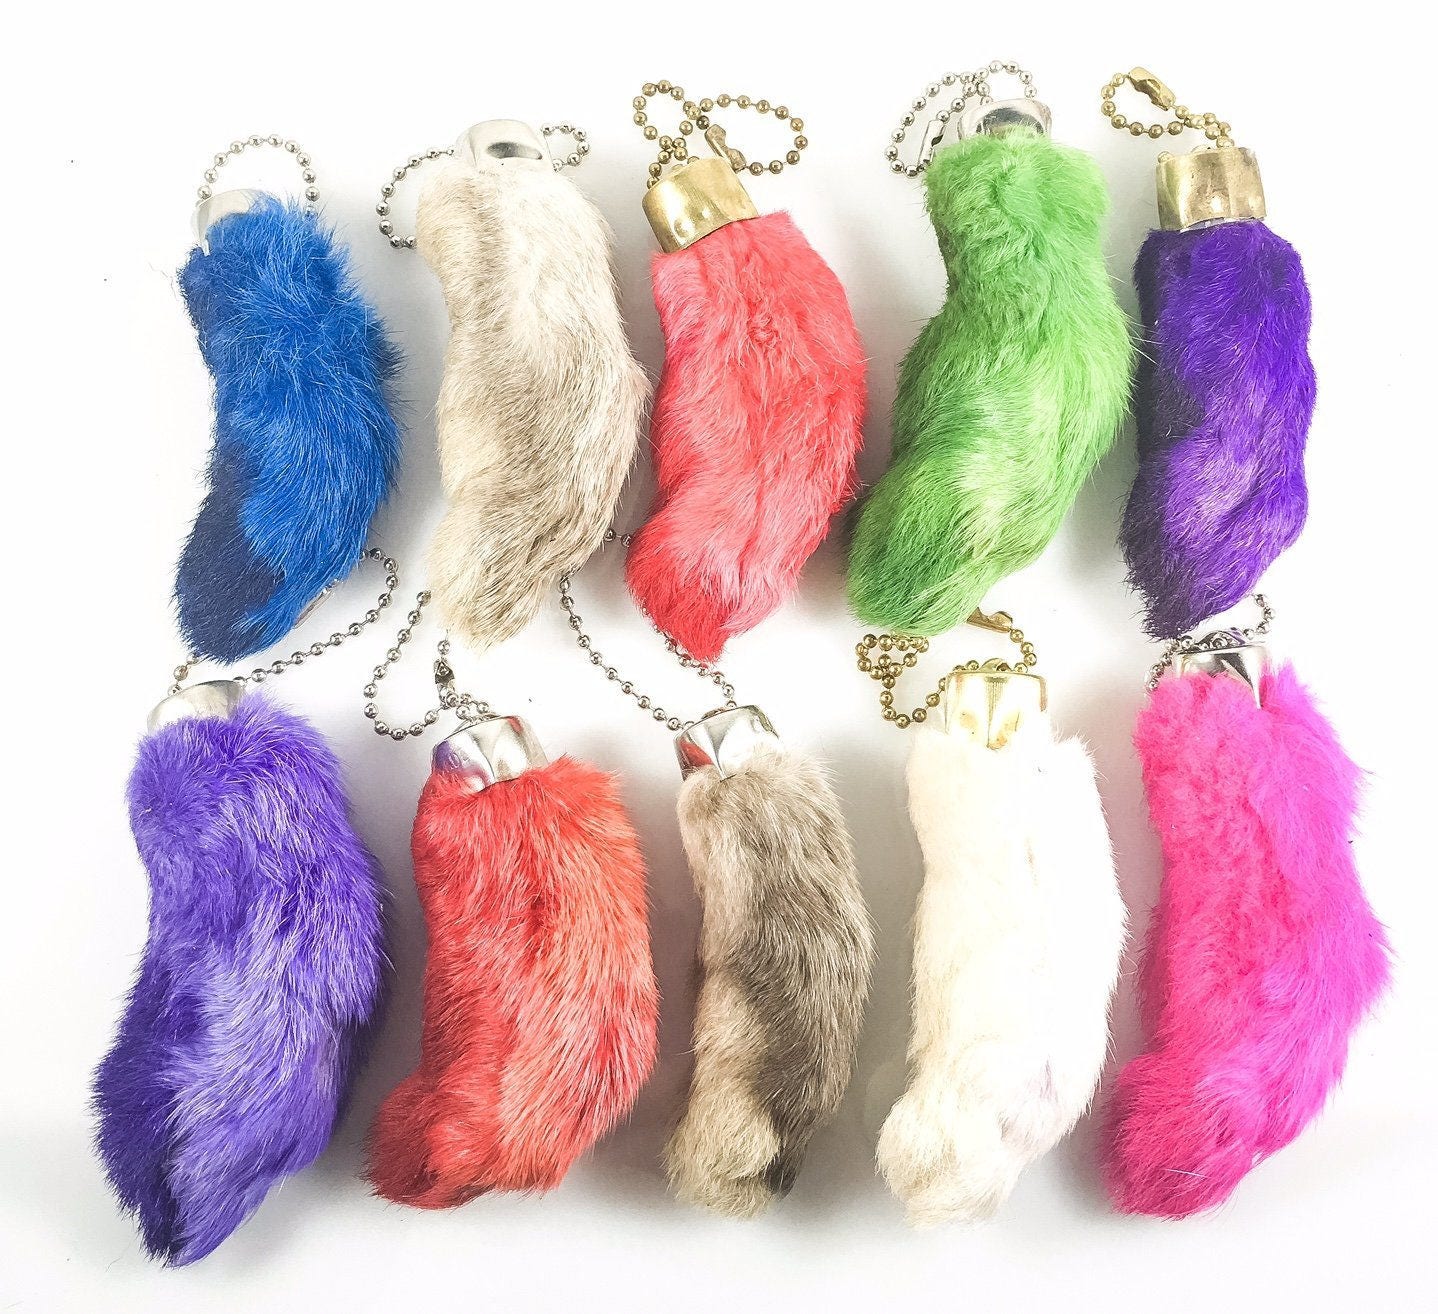 bobkitchener Dangerous Threads Premium Rabbit Rabbits Foot Keychain Assorted Colors 10 Pieces